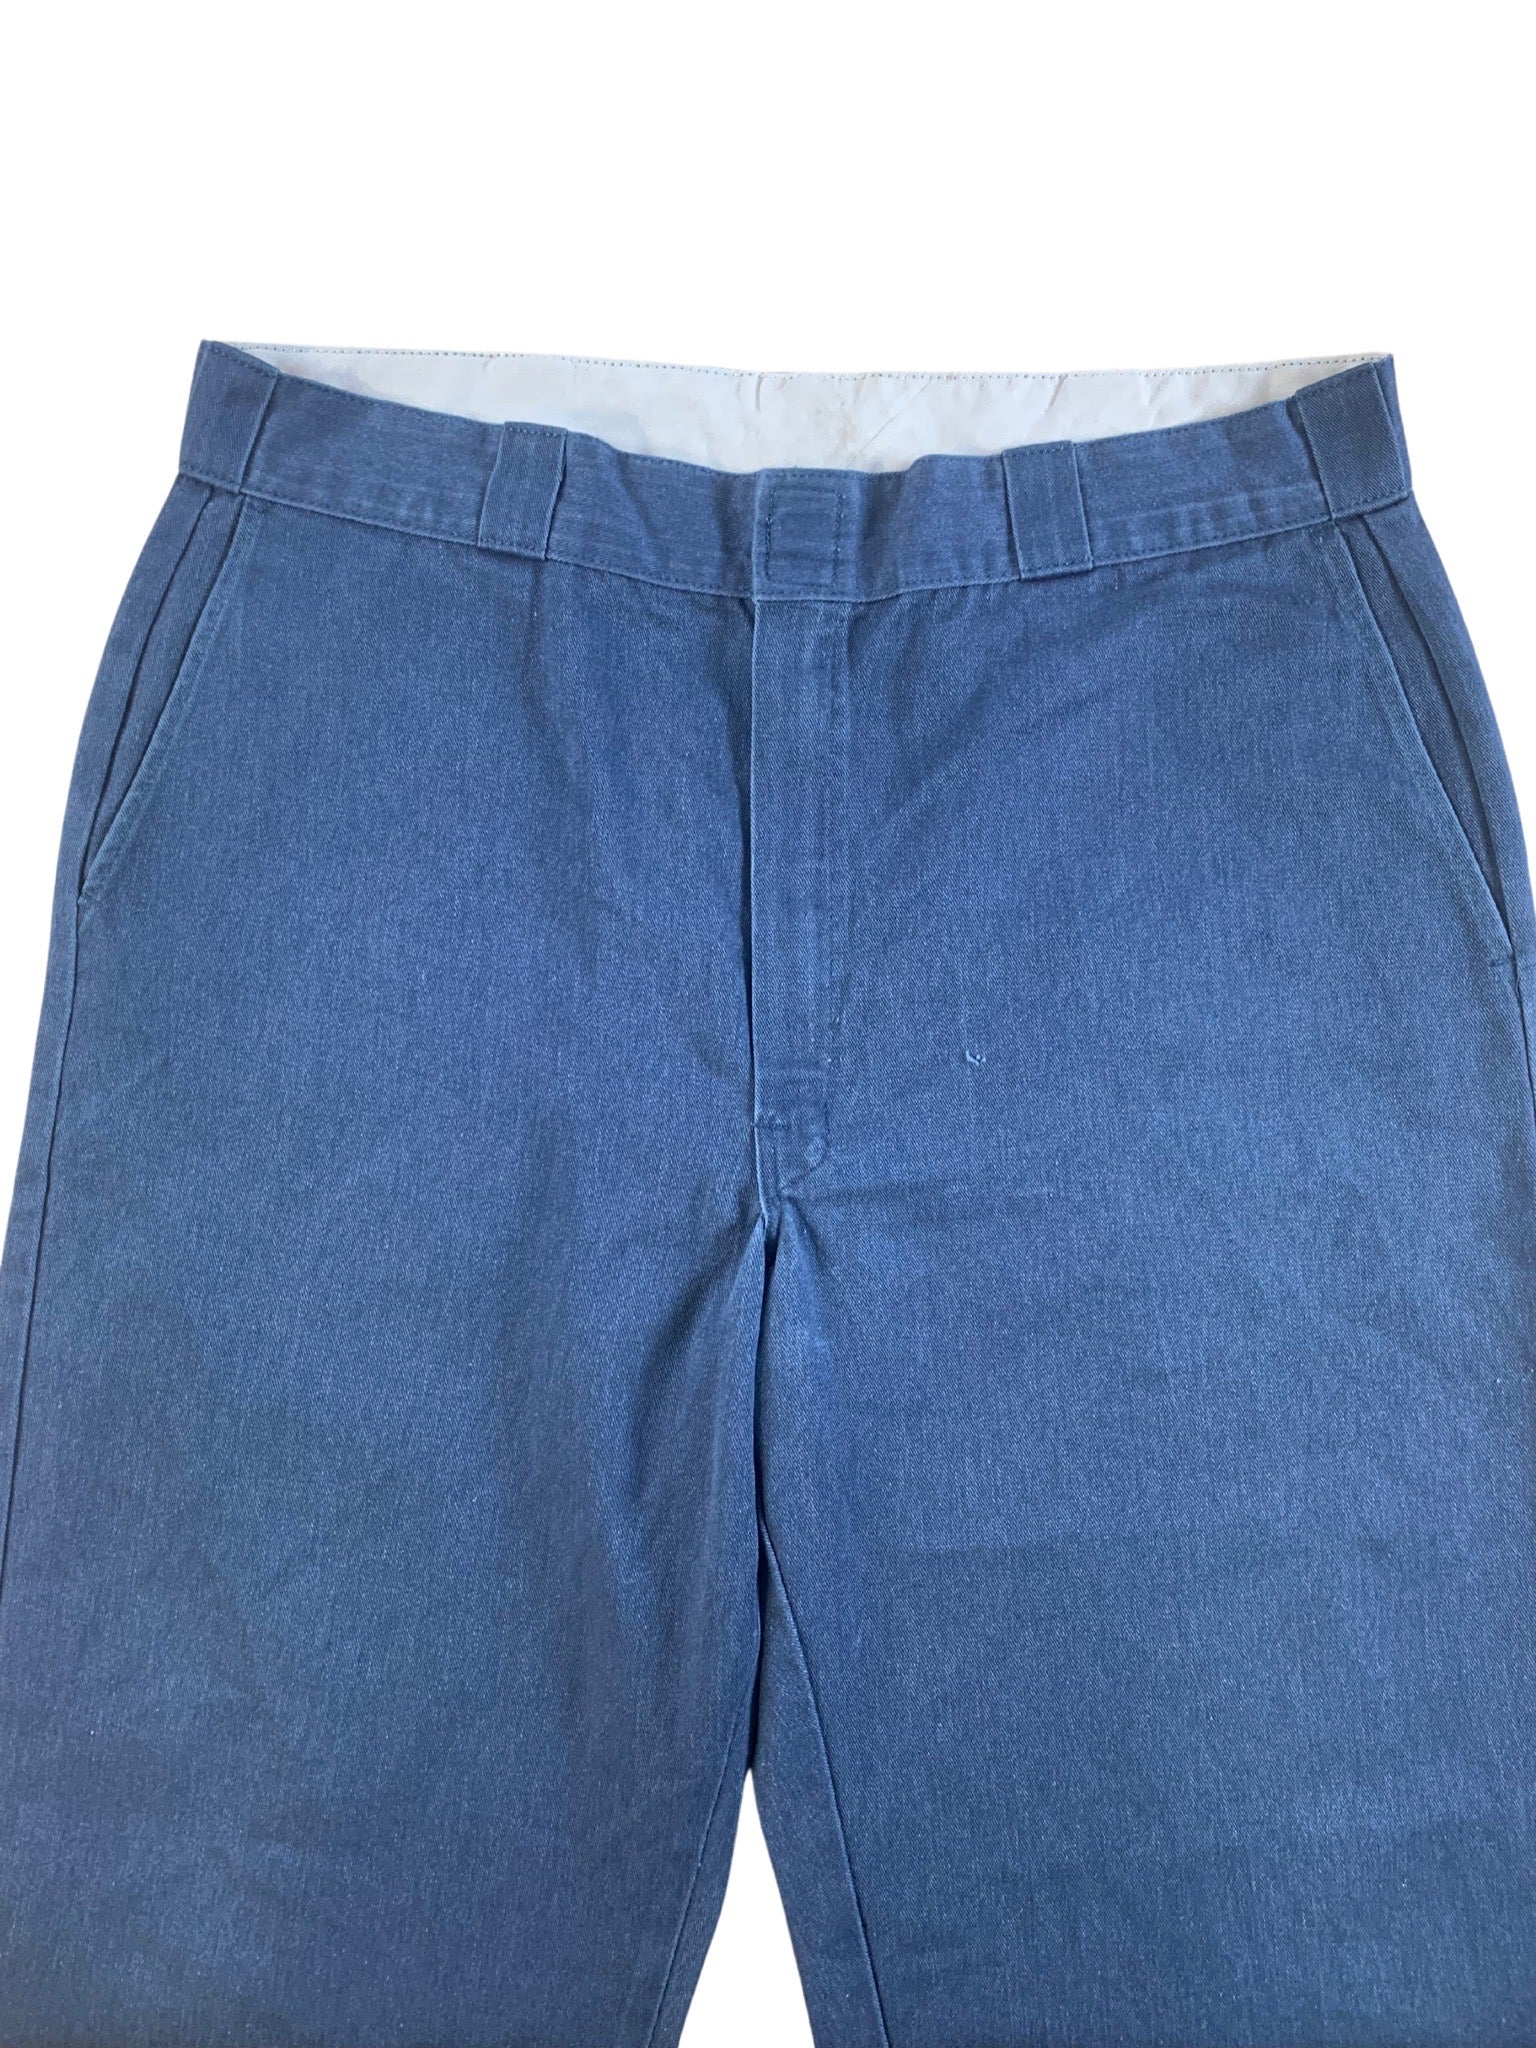 1x Vintage DICKIES Navy Blue Straight Leg Trousers - Waist 31 - Length 30 - Vintage Superstore Online